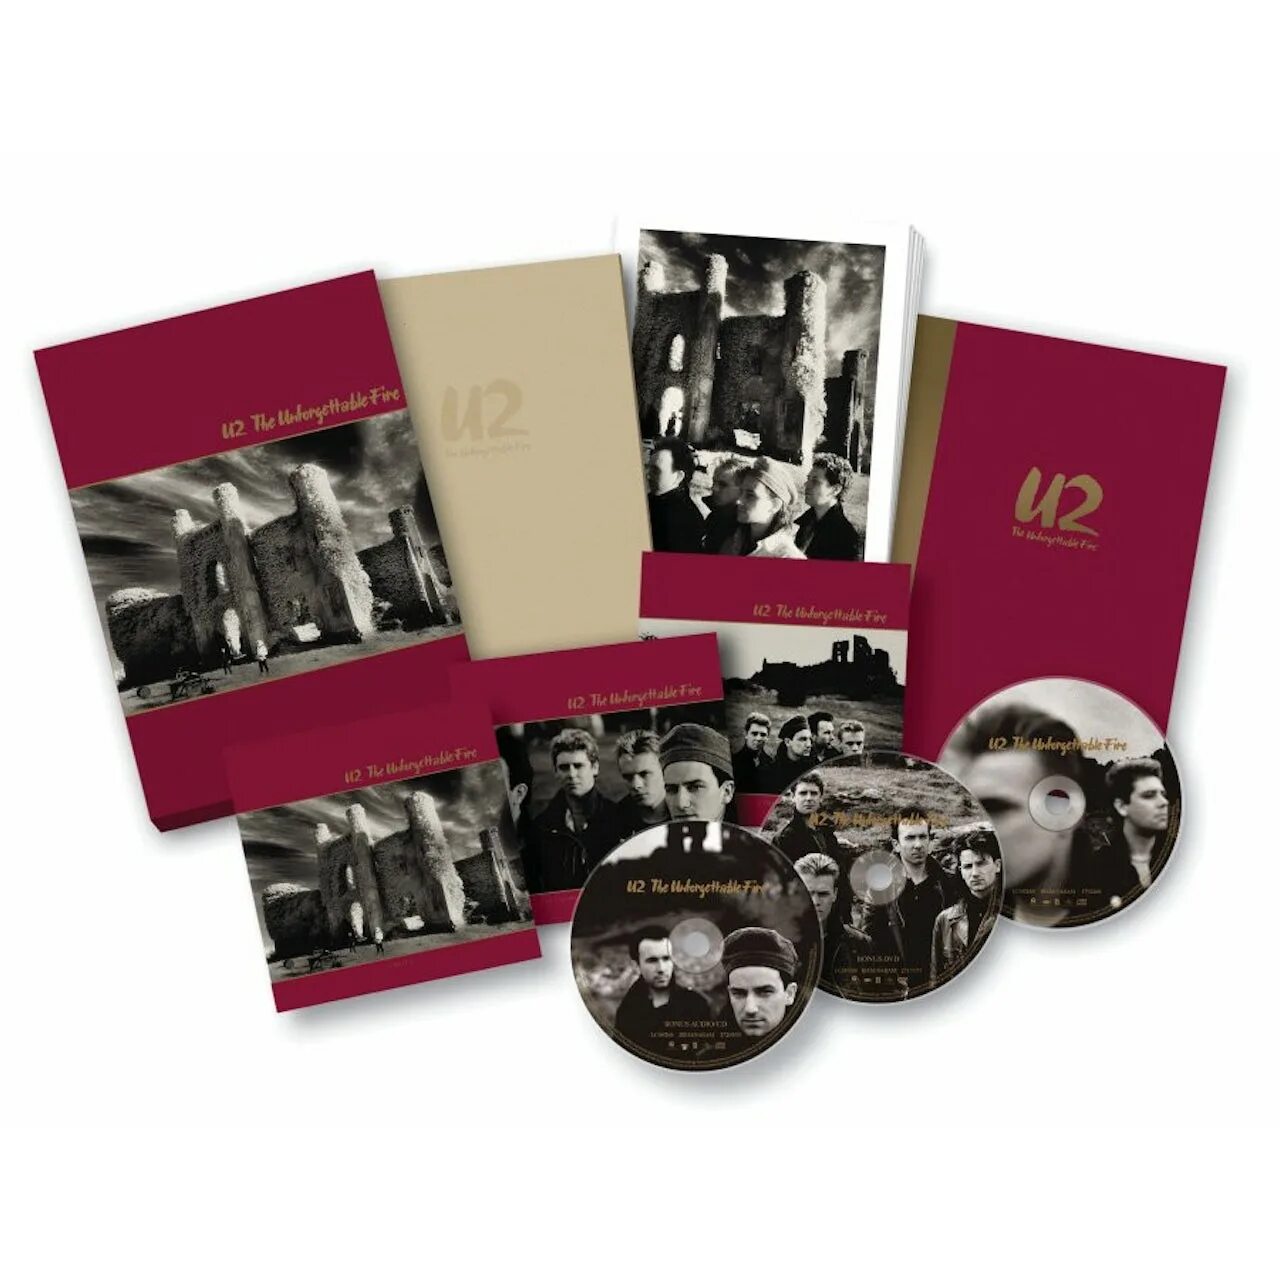 U2 CD. CD диск u 2. Компакт-диск u2 18 Singles. U2 CD только диски.